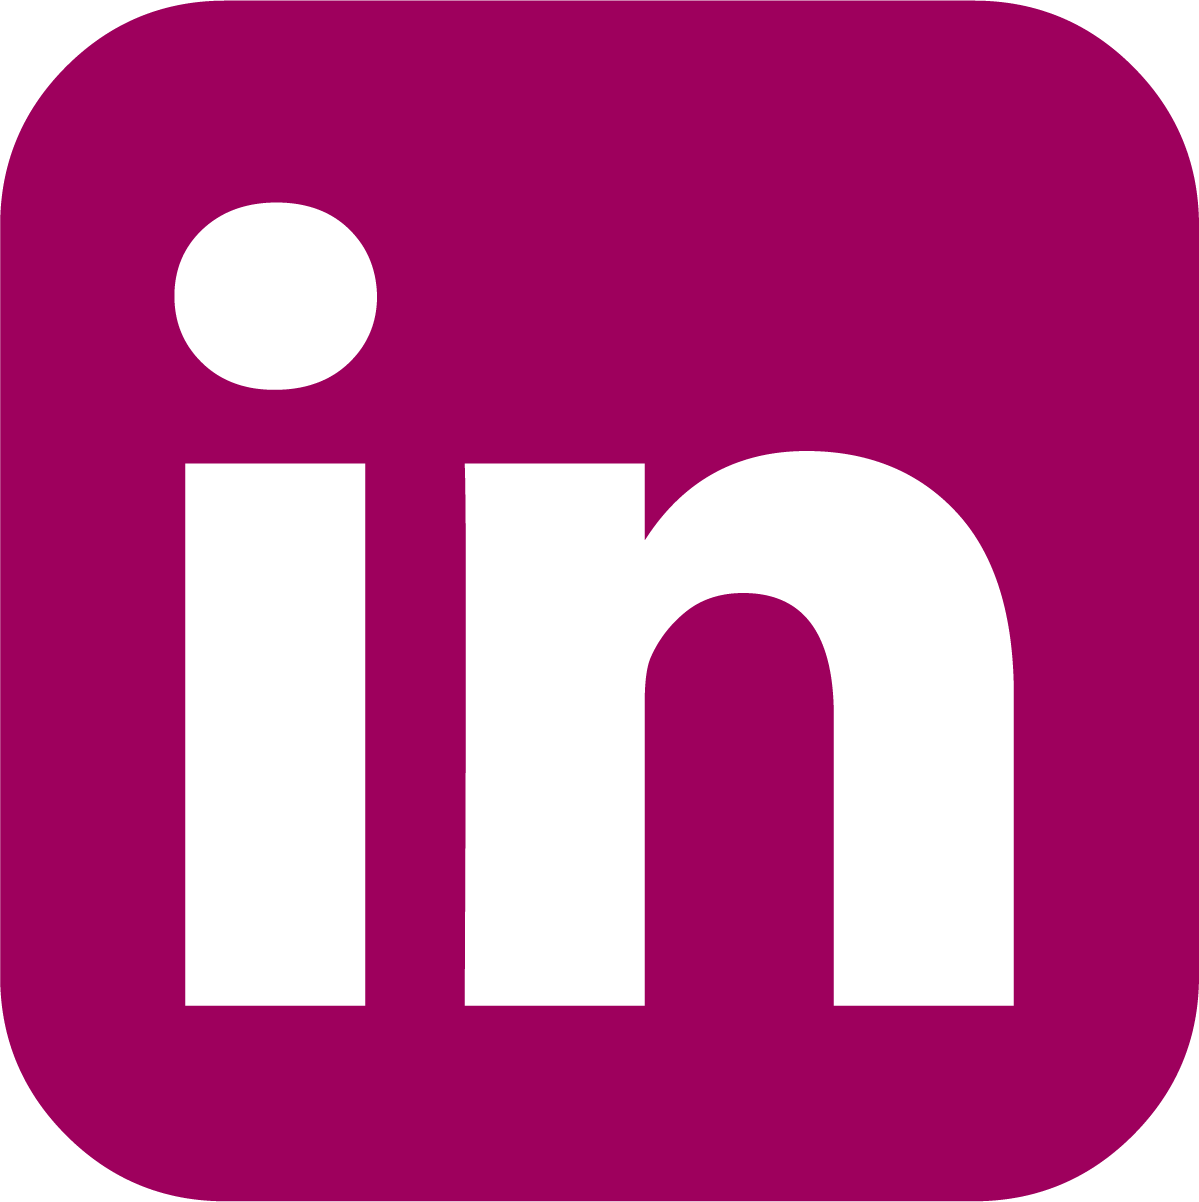 Contact Me On LinkedIn Logo - Free Small Linkedin Icon 270343. Download Small Linkedin Icon